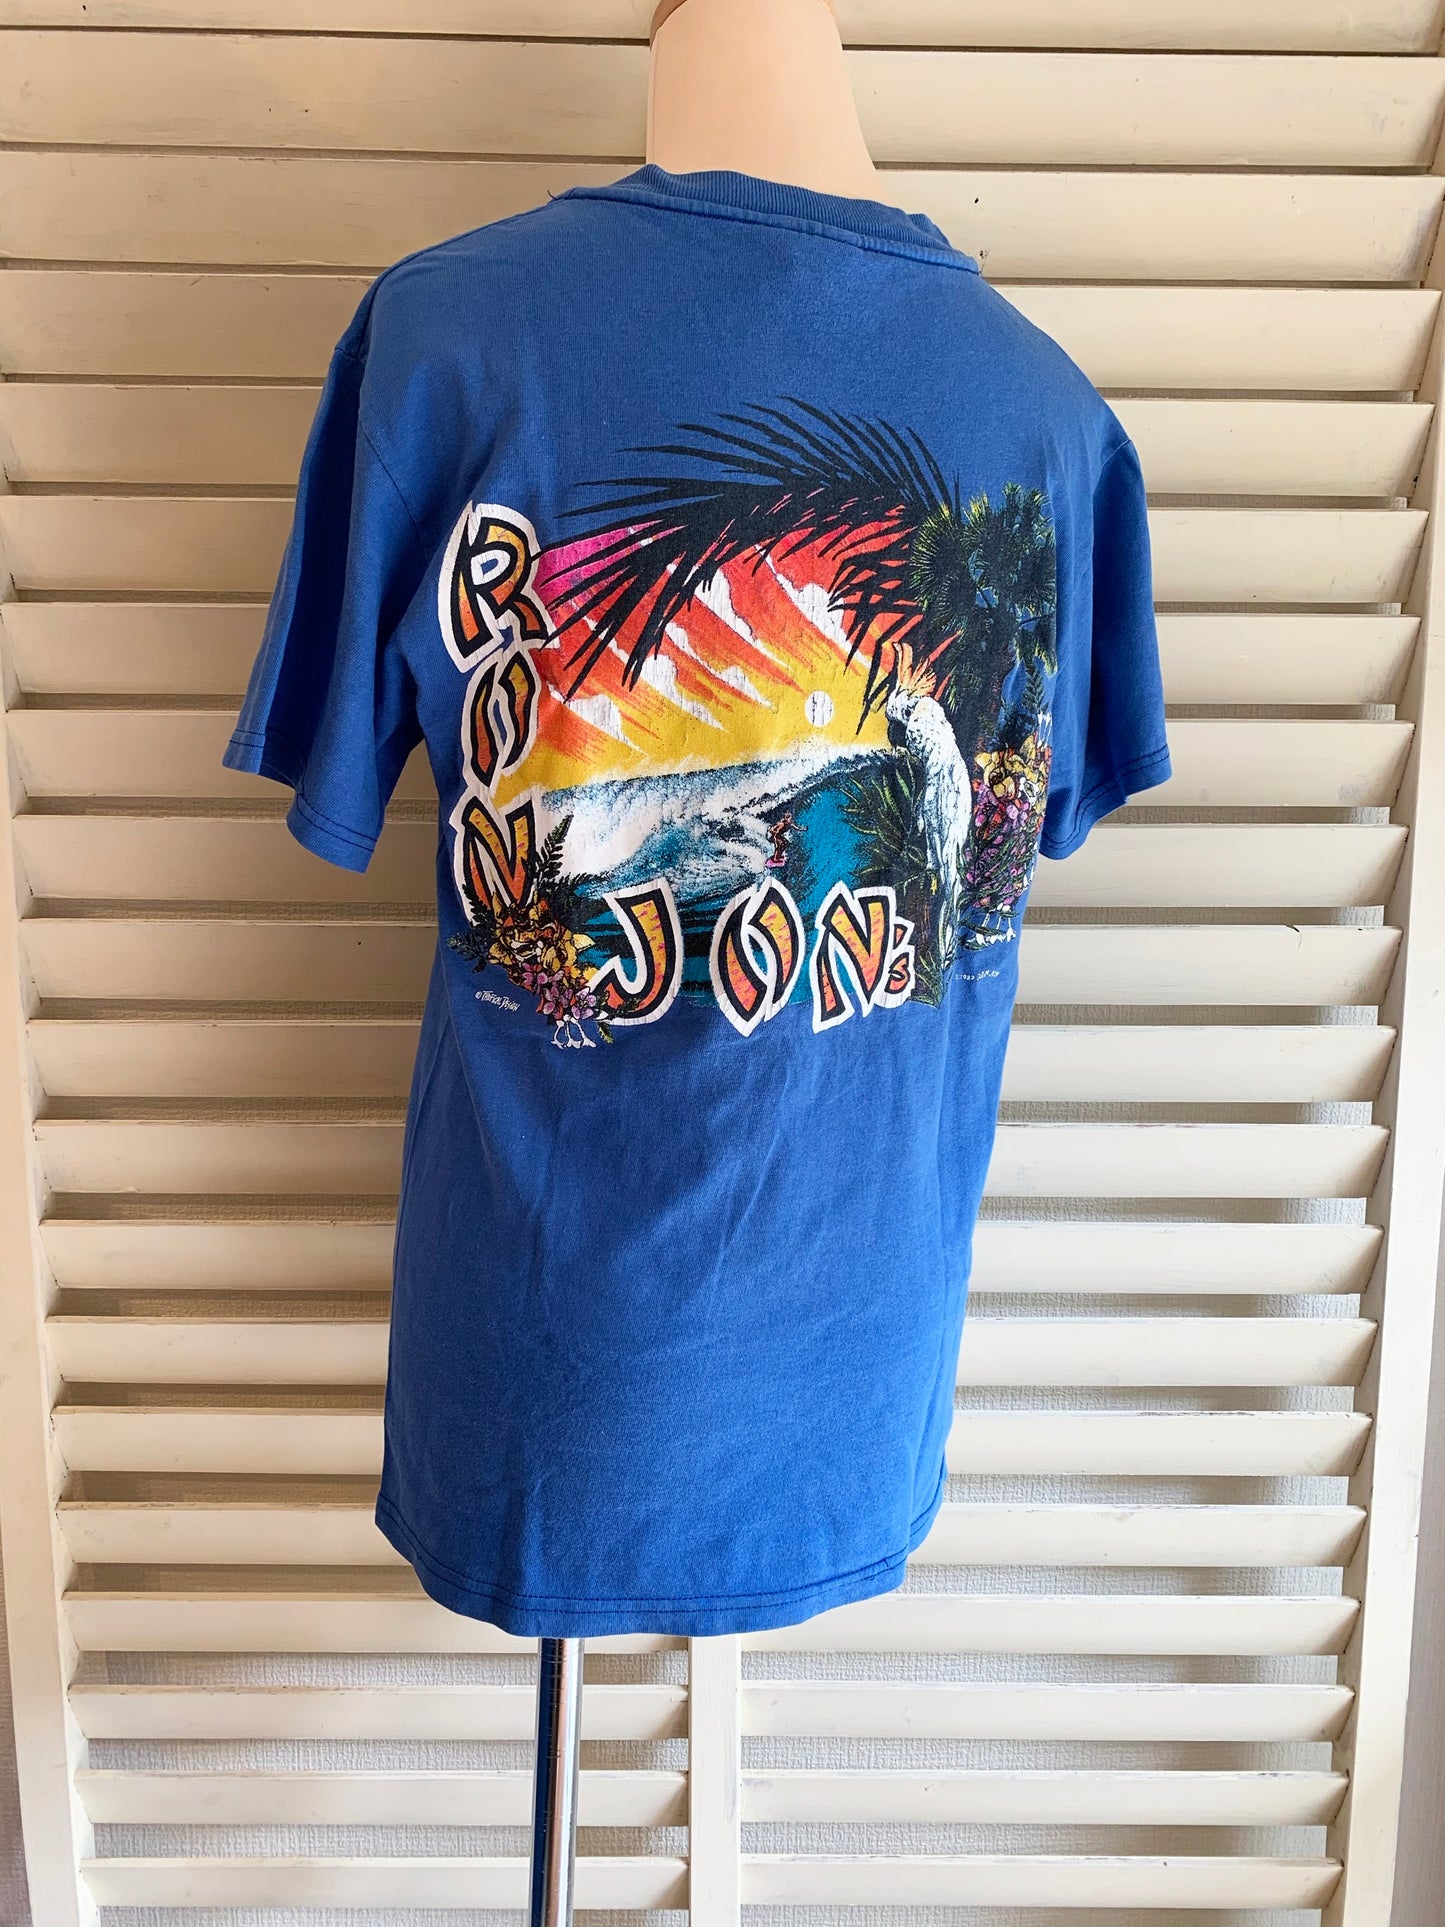 【RONJON SURF SHOP】ロンジョンサーフショップ ブルー Tシャツ (men's S)